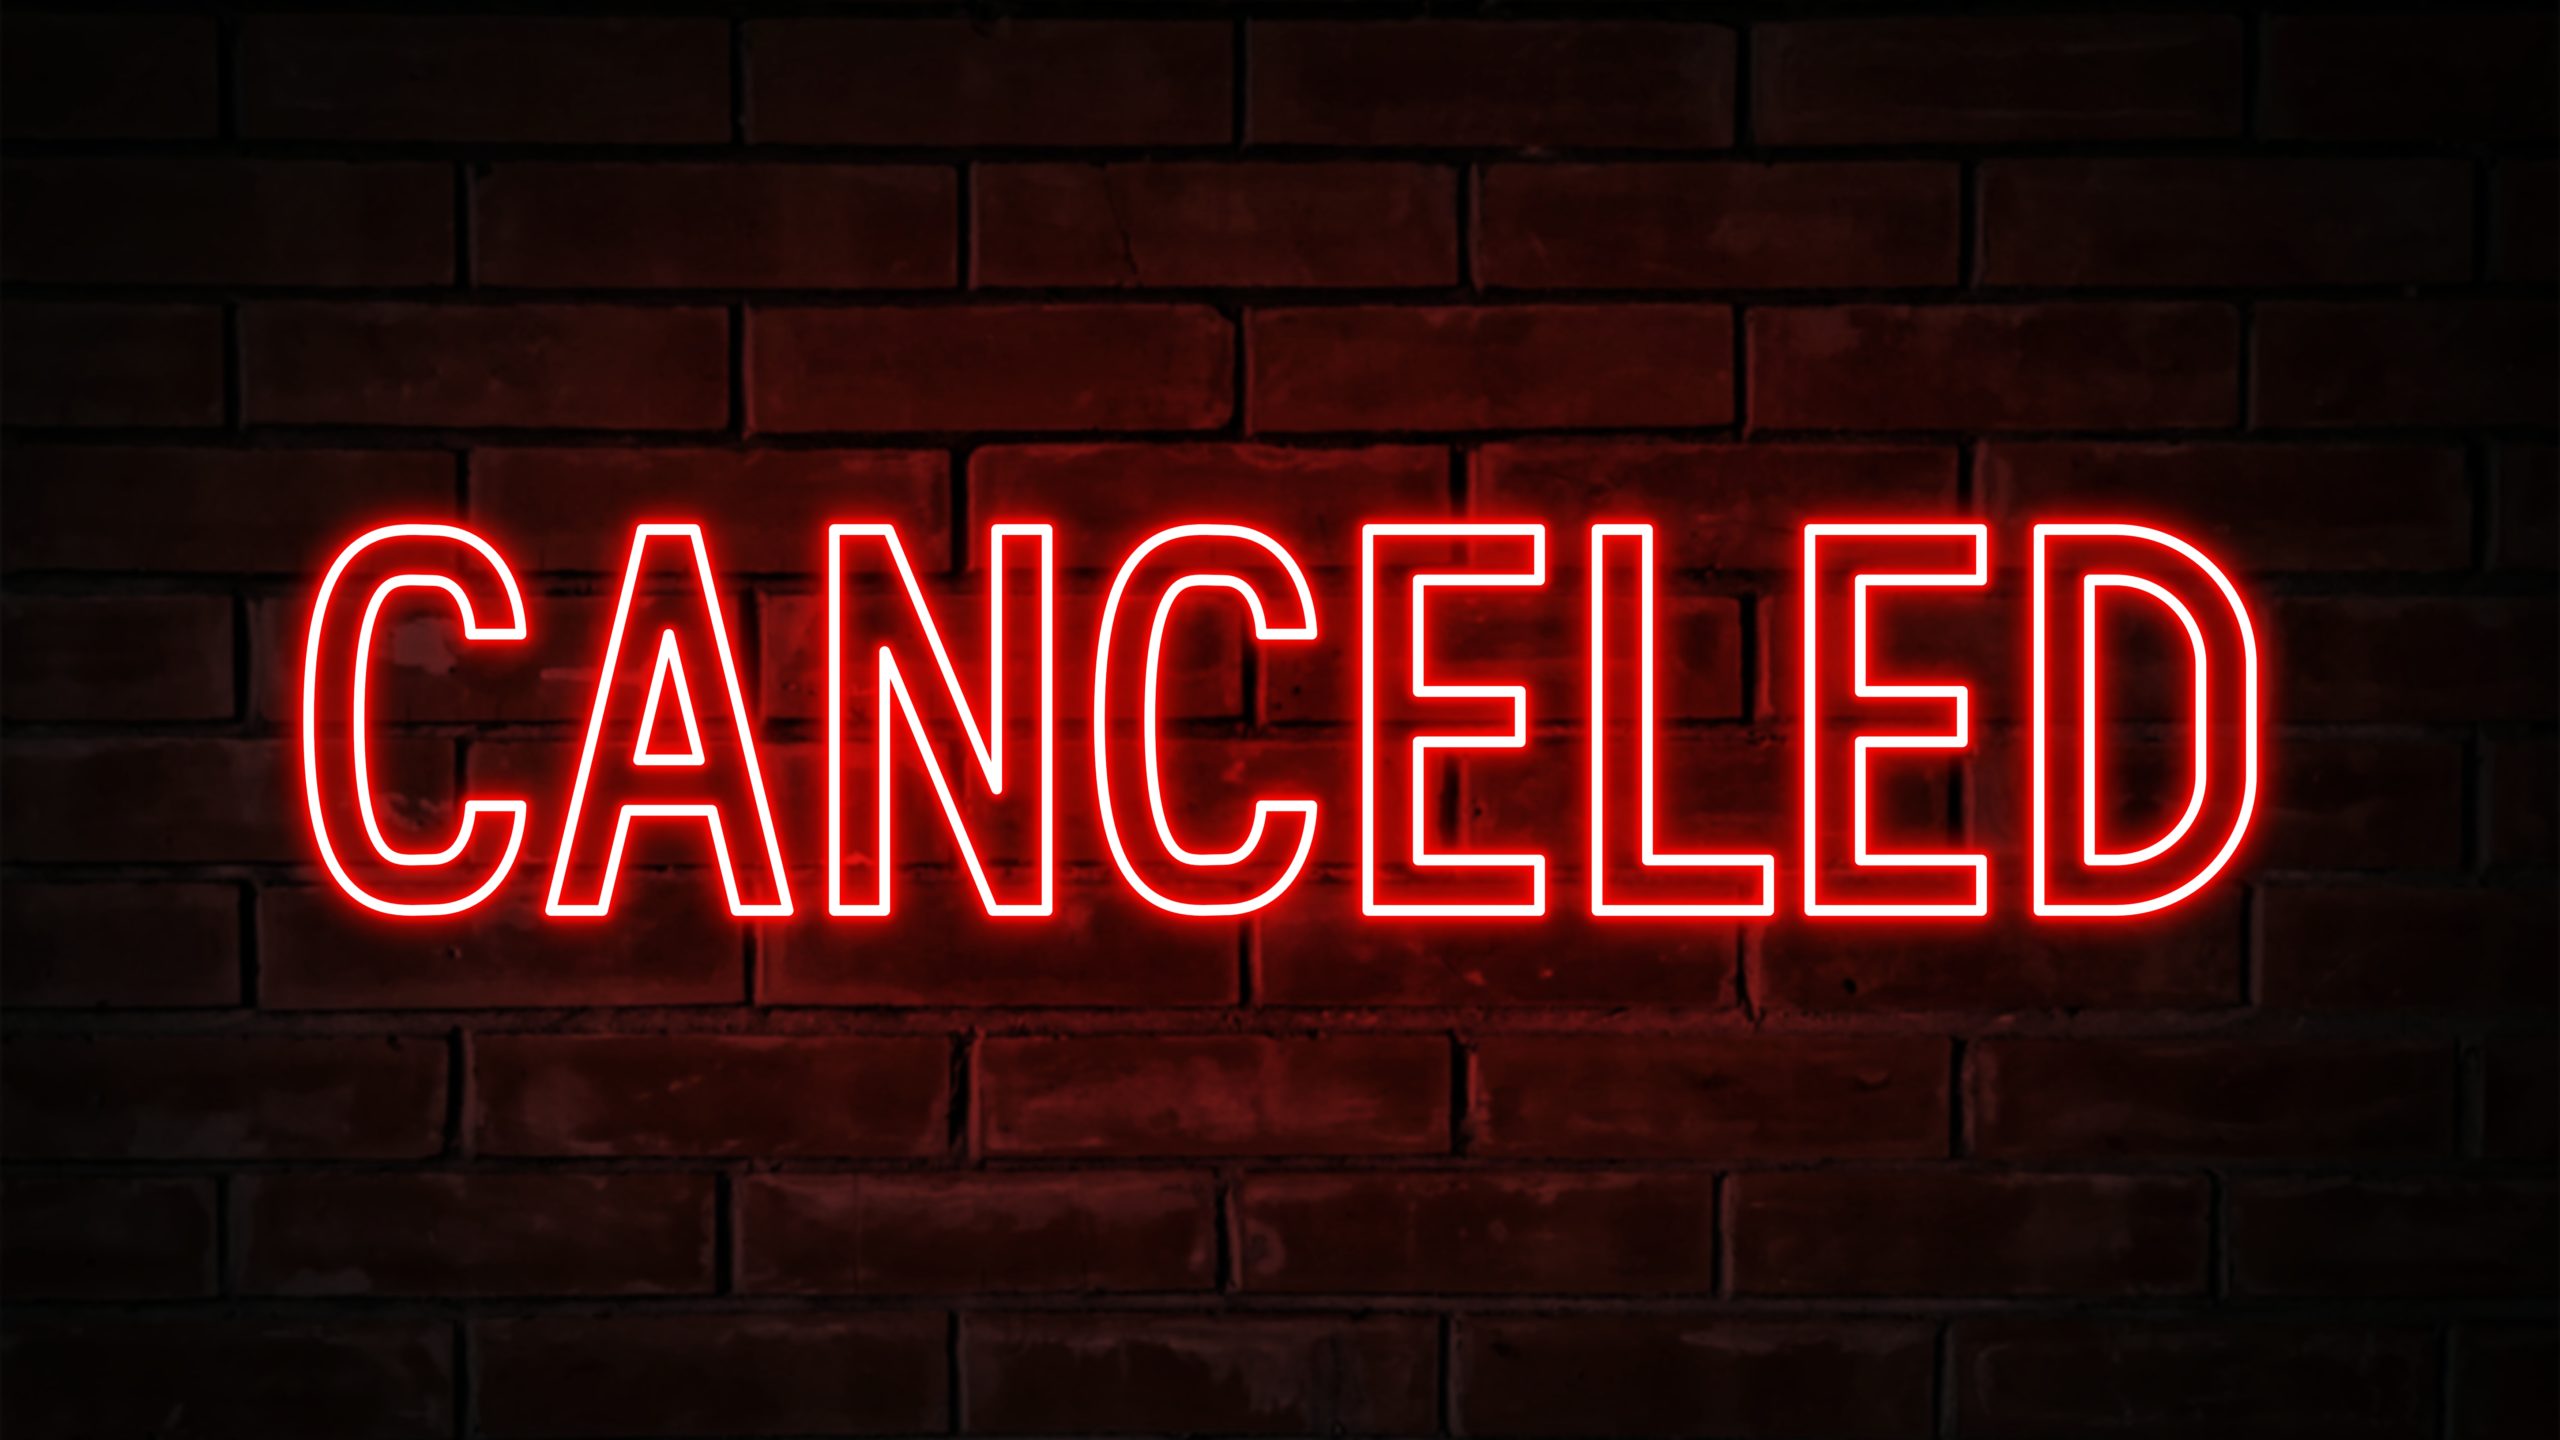 canceled red neon light word on brick wall backg 2021 10 19 15 30 18 utc